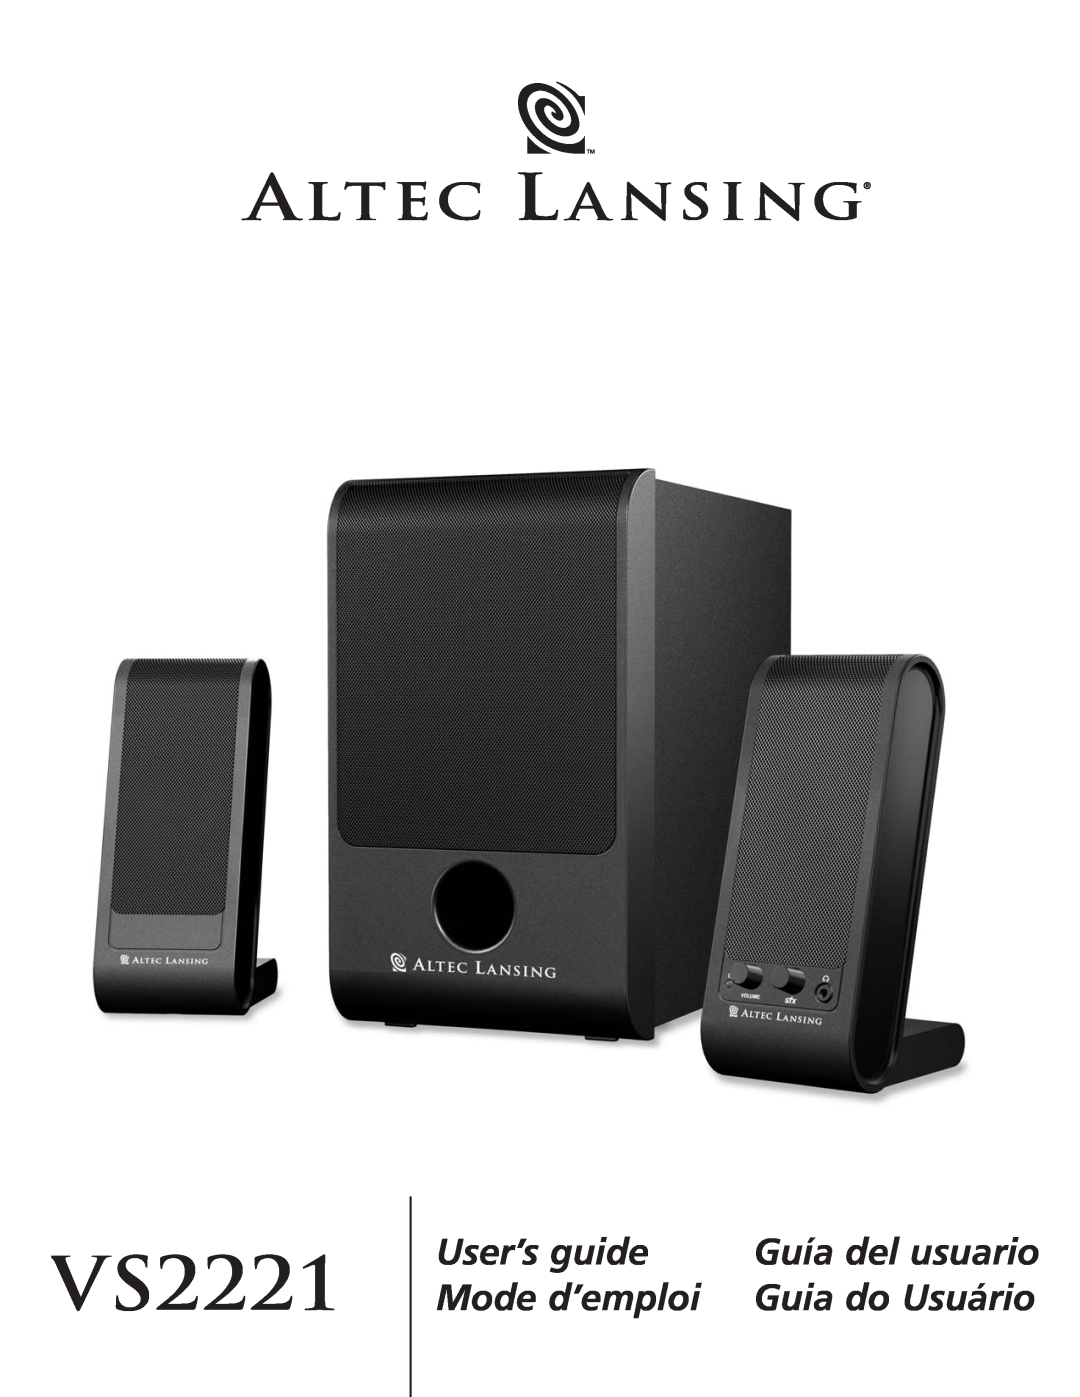 Altec Lansing VS2221 manual User’s guide, Mode d’emploi, Guía del usuario, Guia do Usuário 